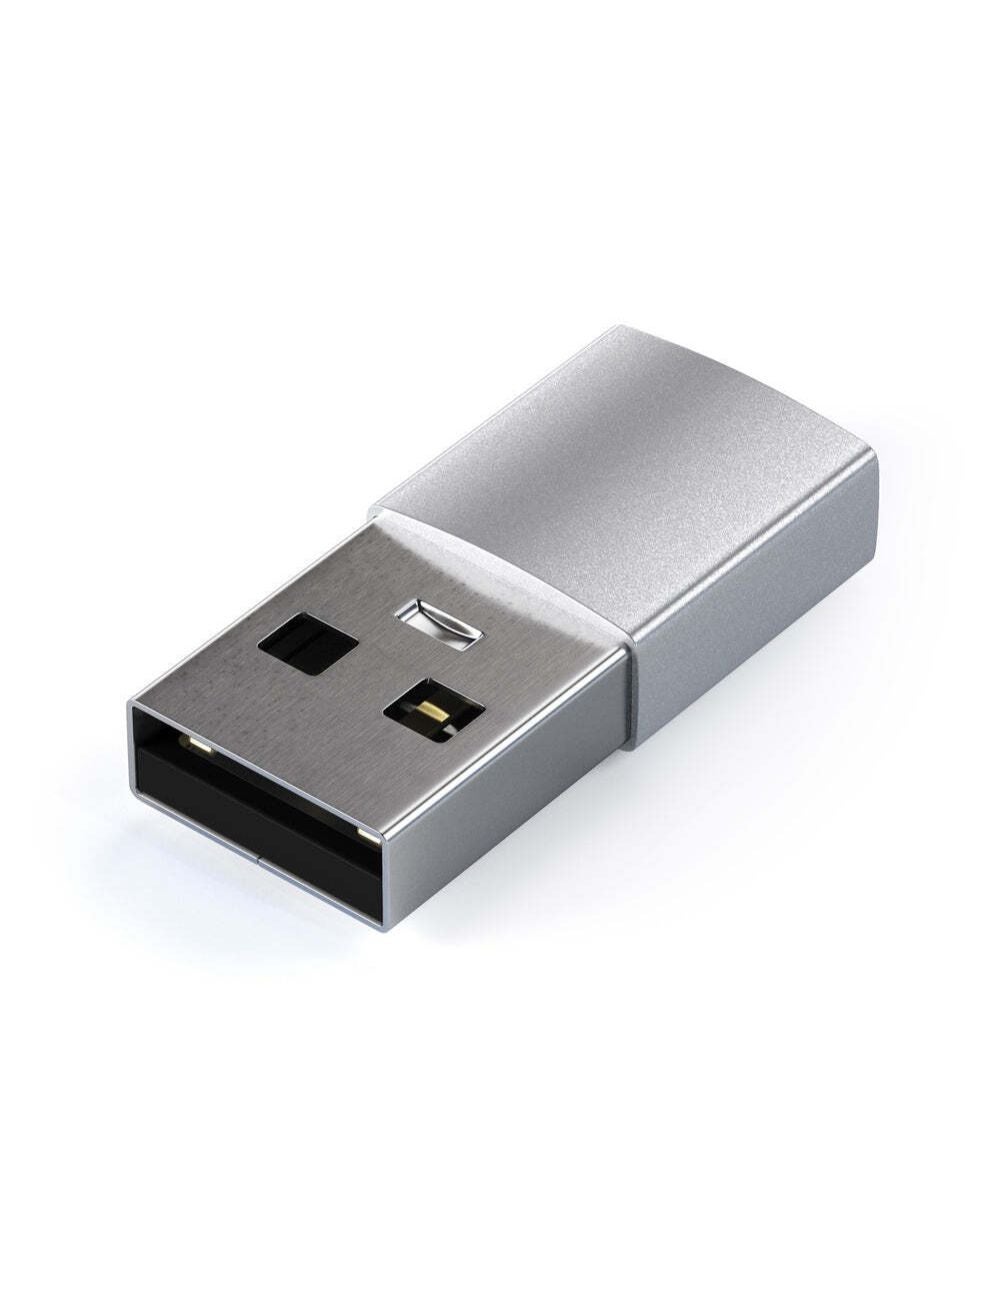 SATECHI TYPE C USB 2 IN 1